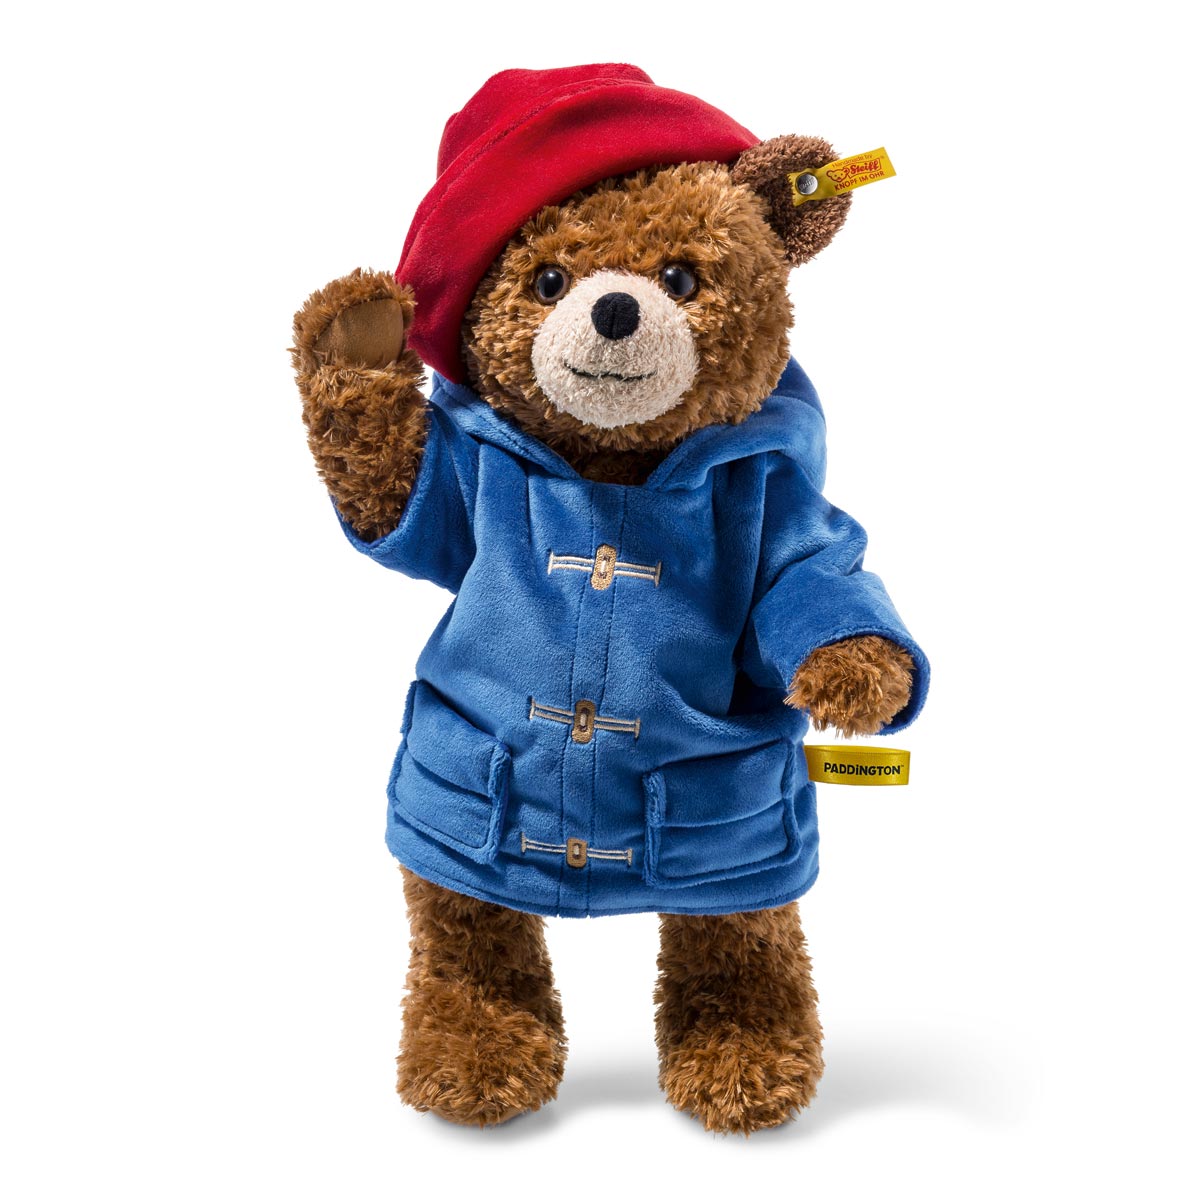 Steiff Plush Paddington Bear  - officially licensed jointed teddy - 38cm